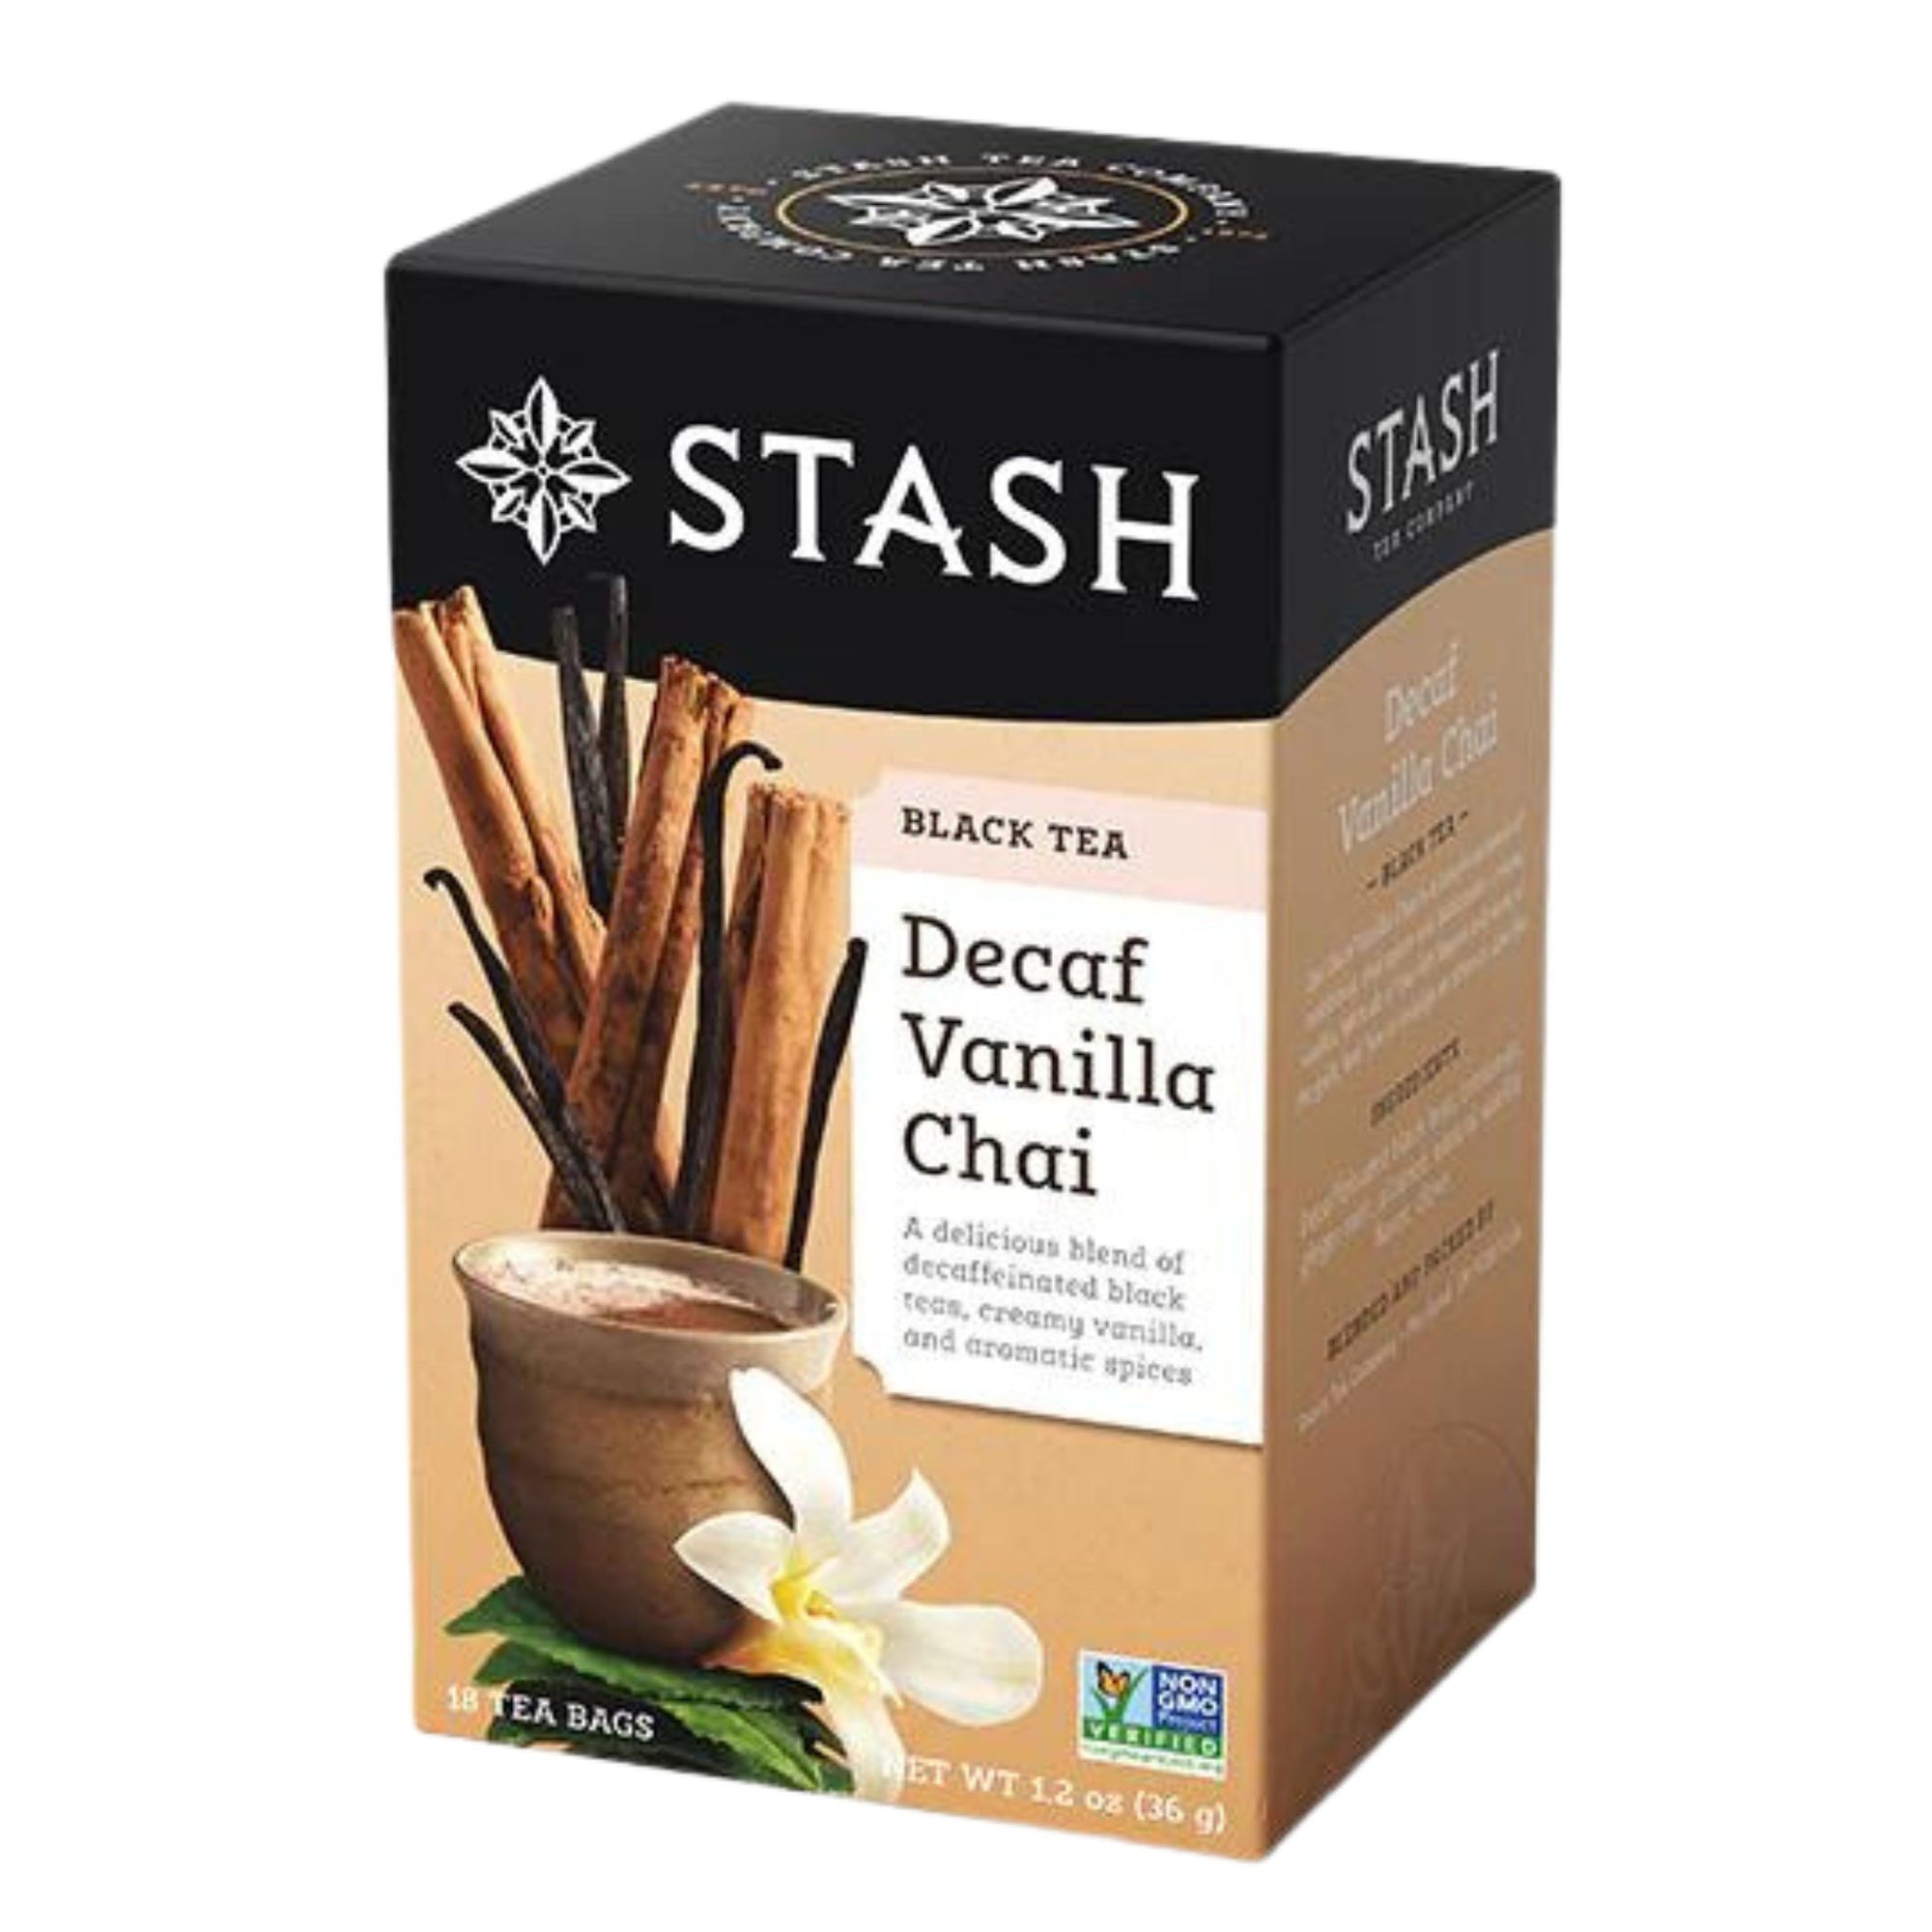 Stash Decaf Vanilla Chai Black tea - 18 tea bags in a box - A delicious blend of decaffeinated black teas, creamy vanilla, and aromatic spices 